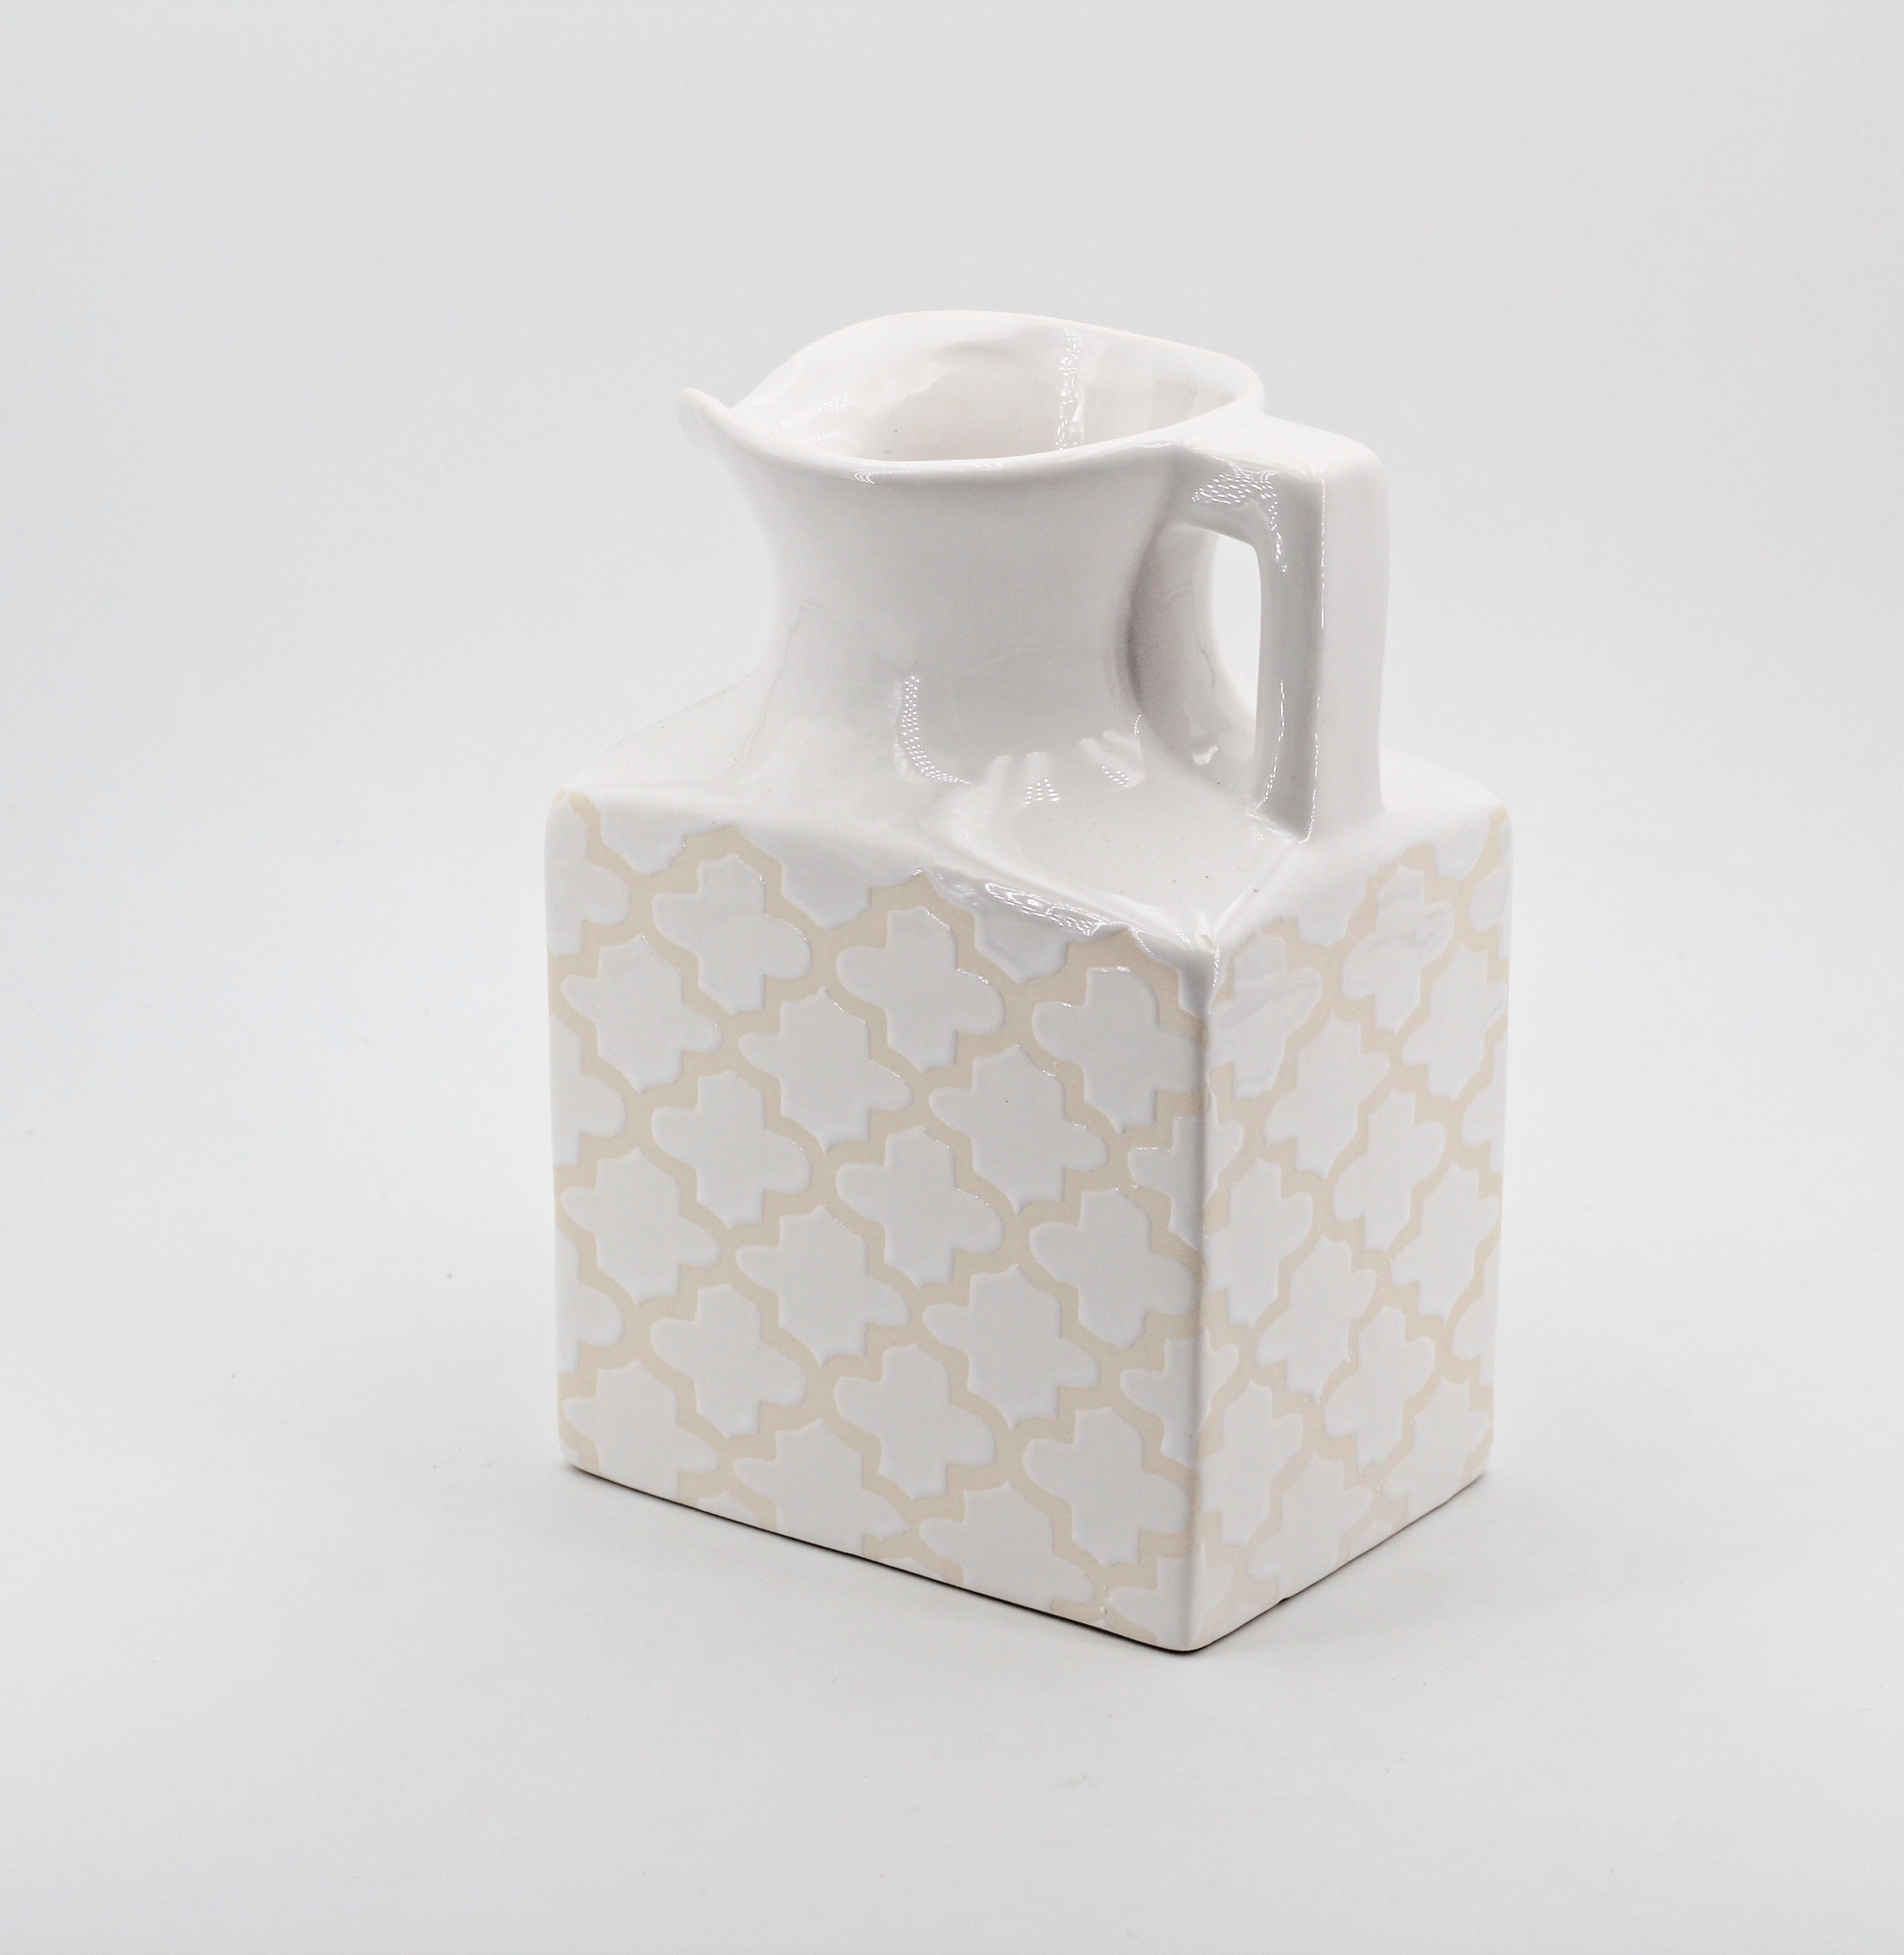 Vasetto in ceramica bianco Pz. 1